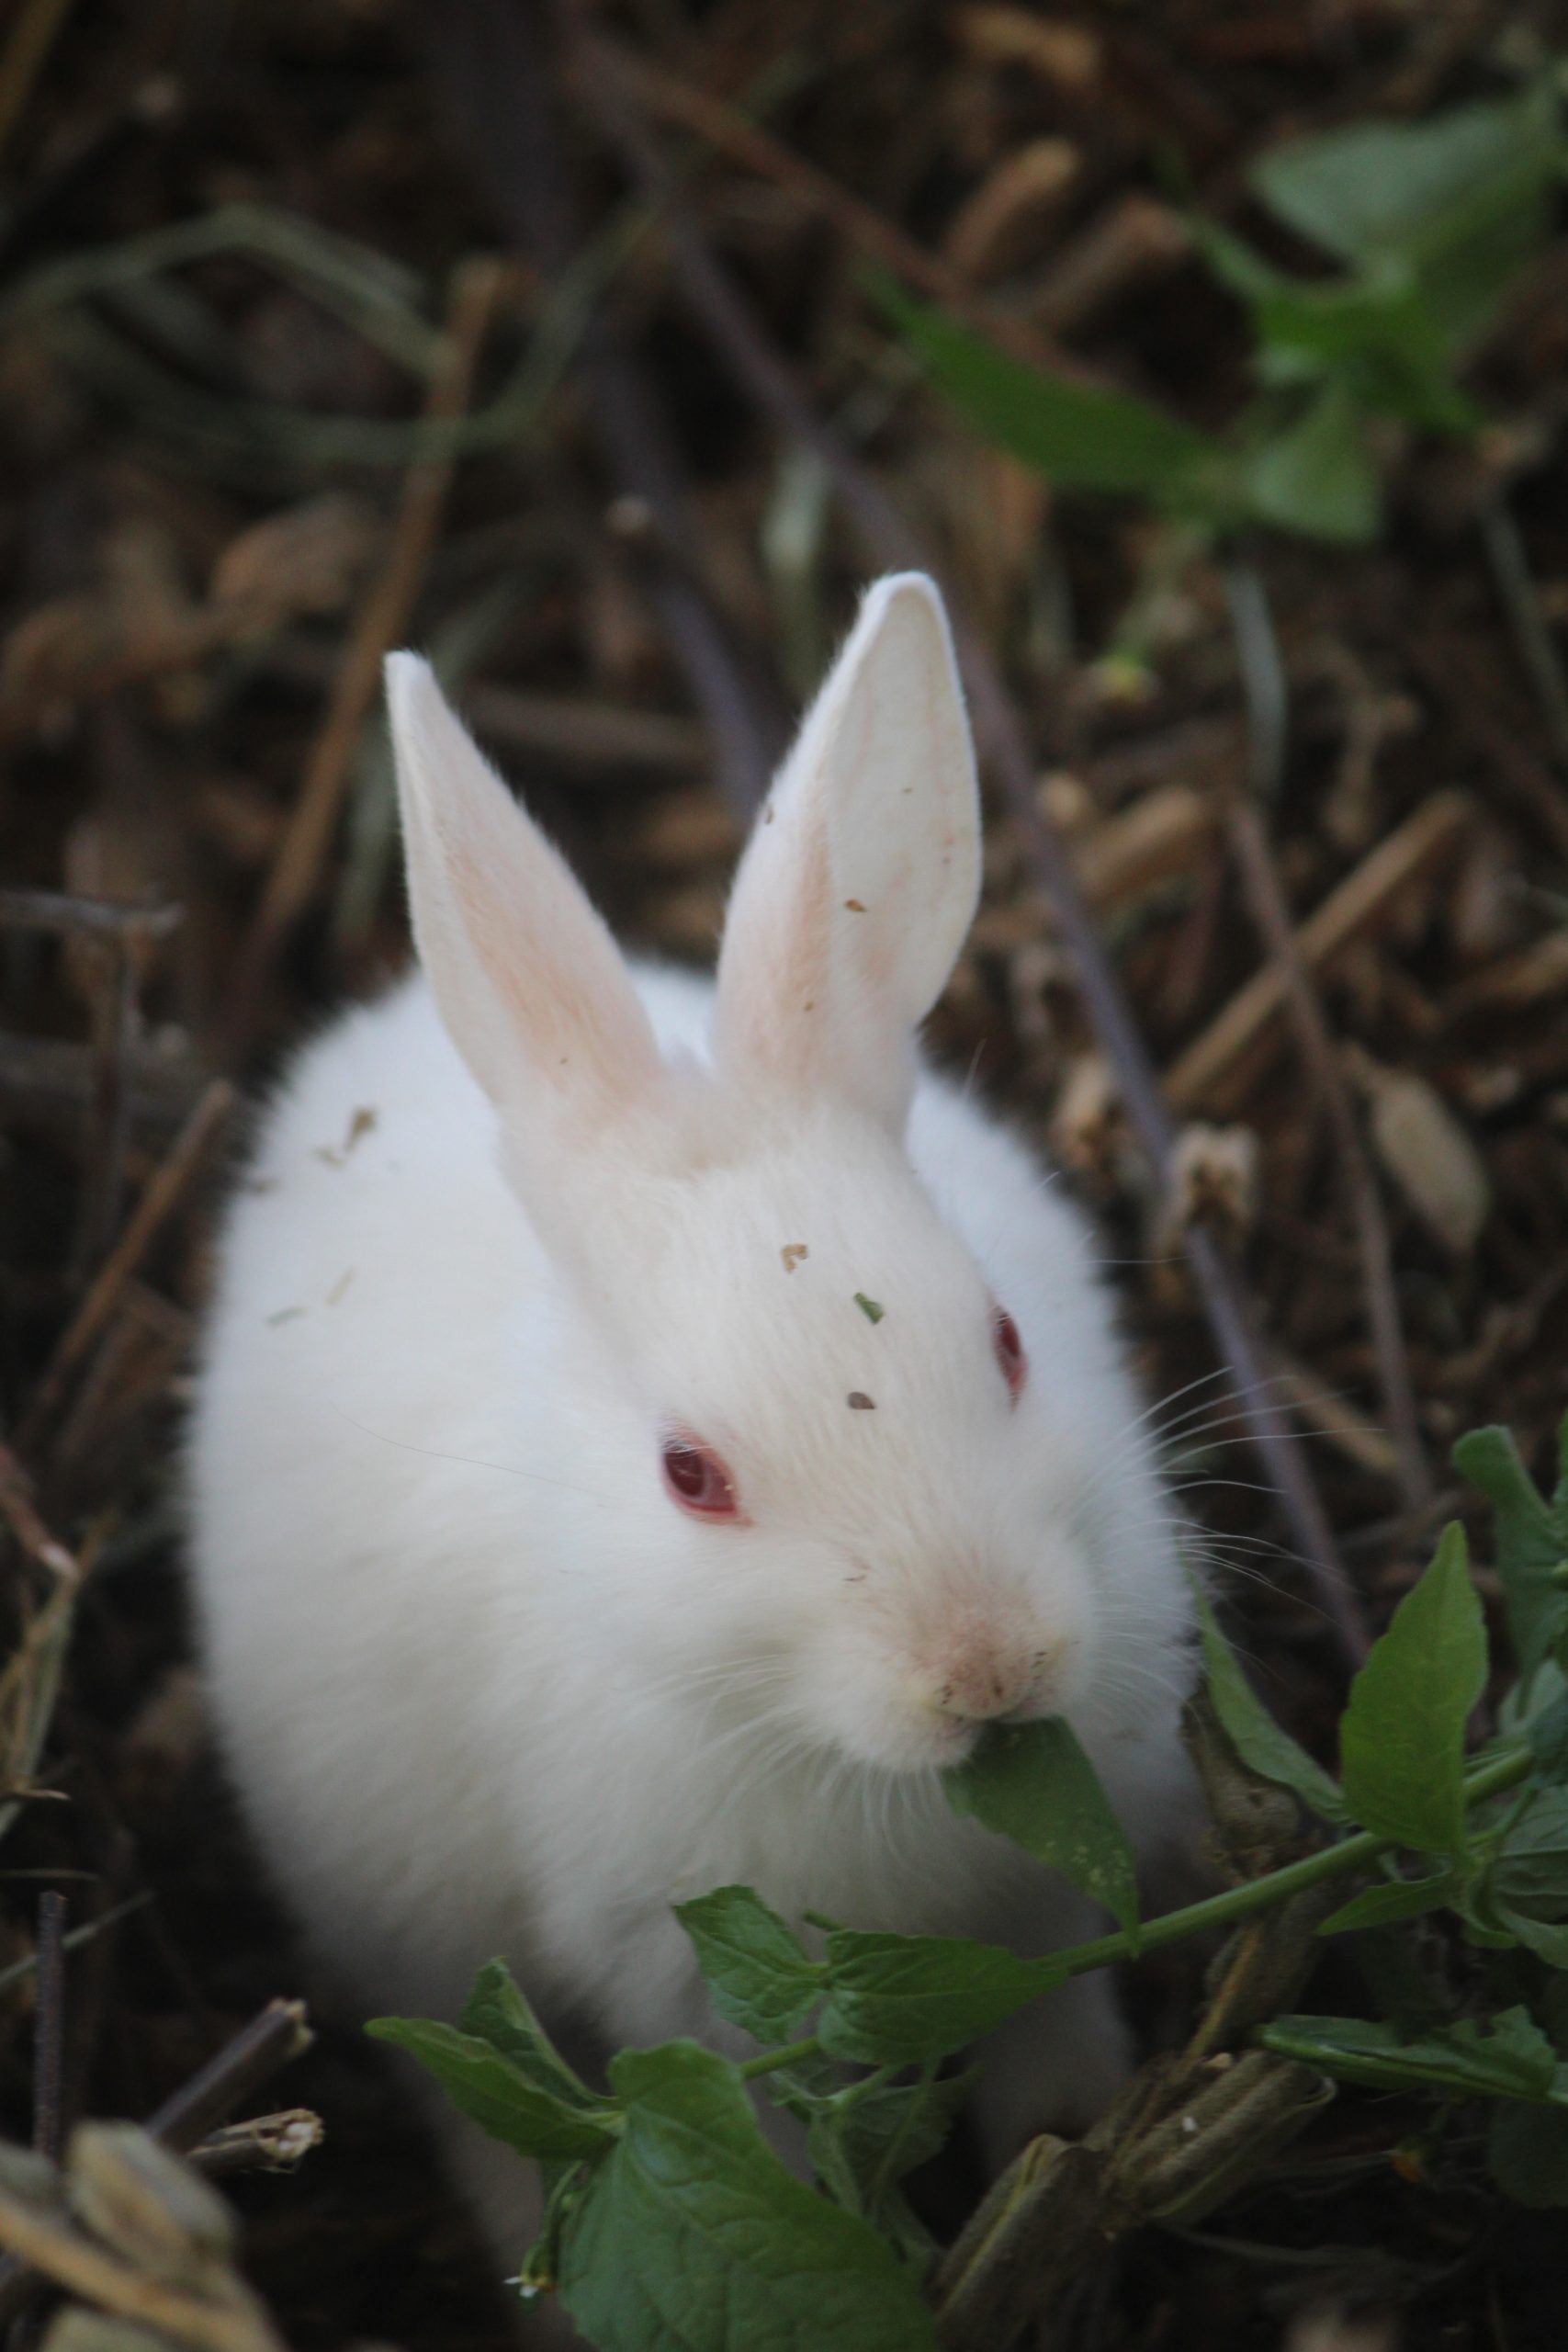 Rabbit eating grass